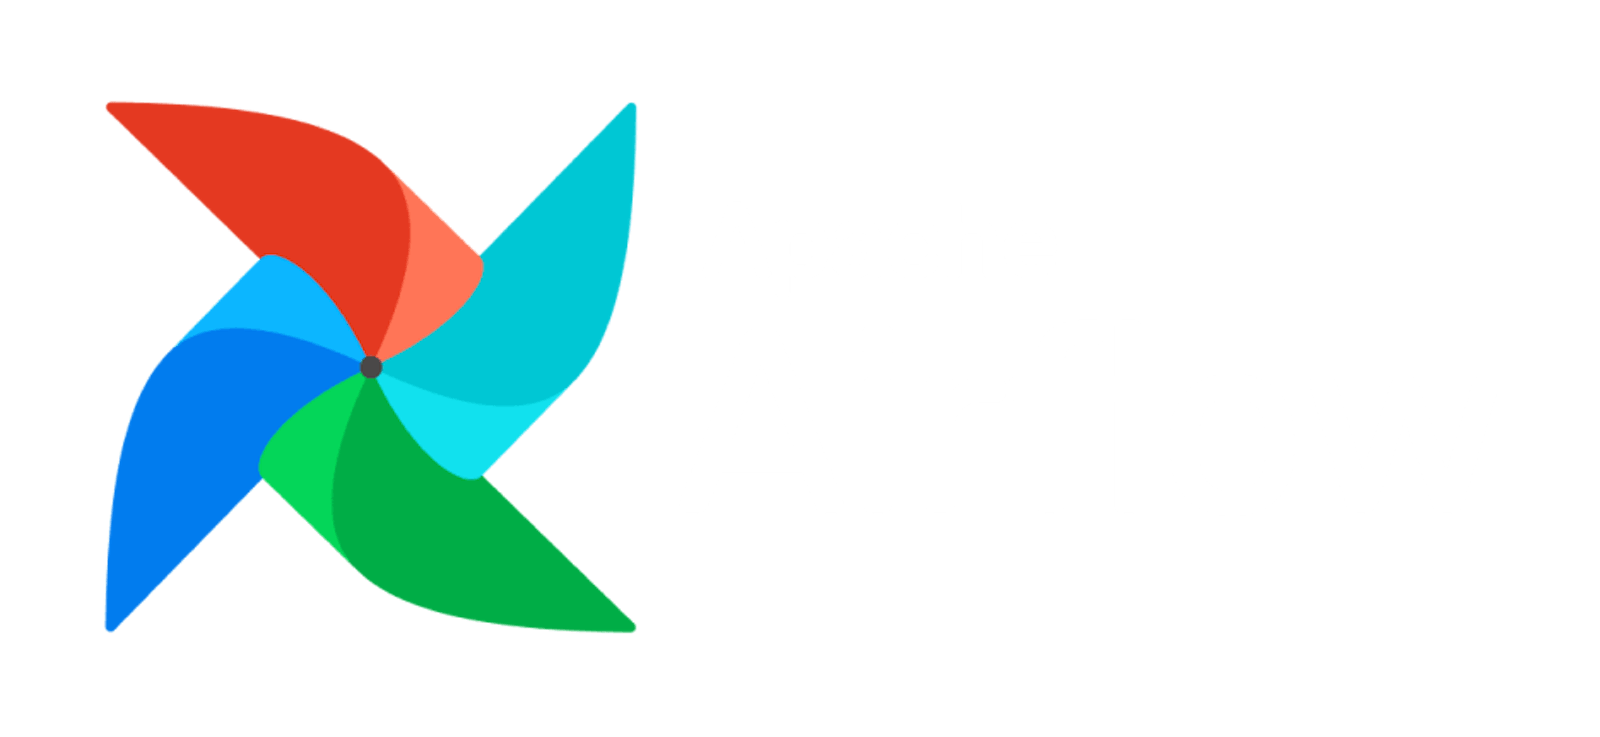 Apache Airflow Demystify - 1 - basics